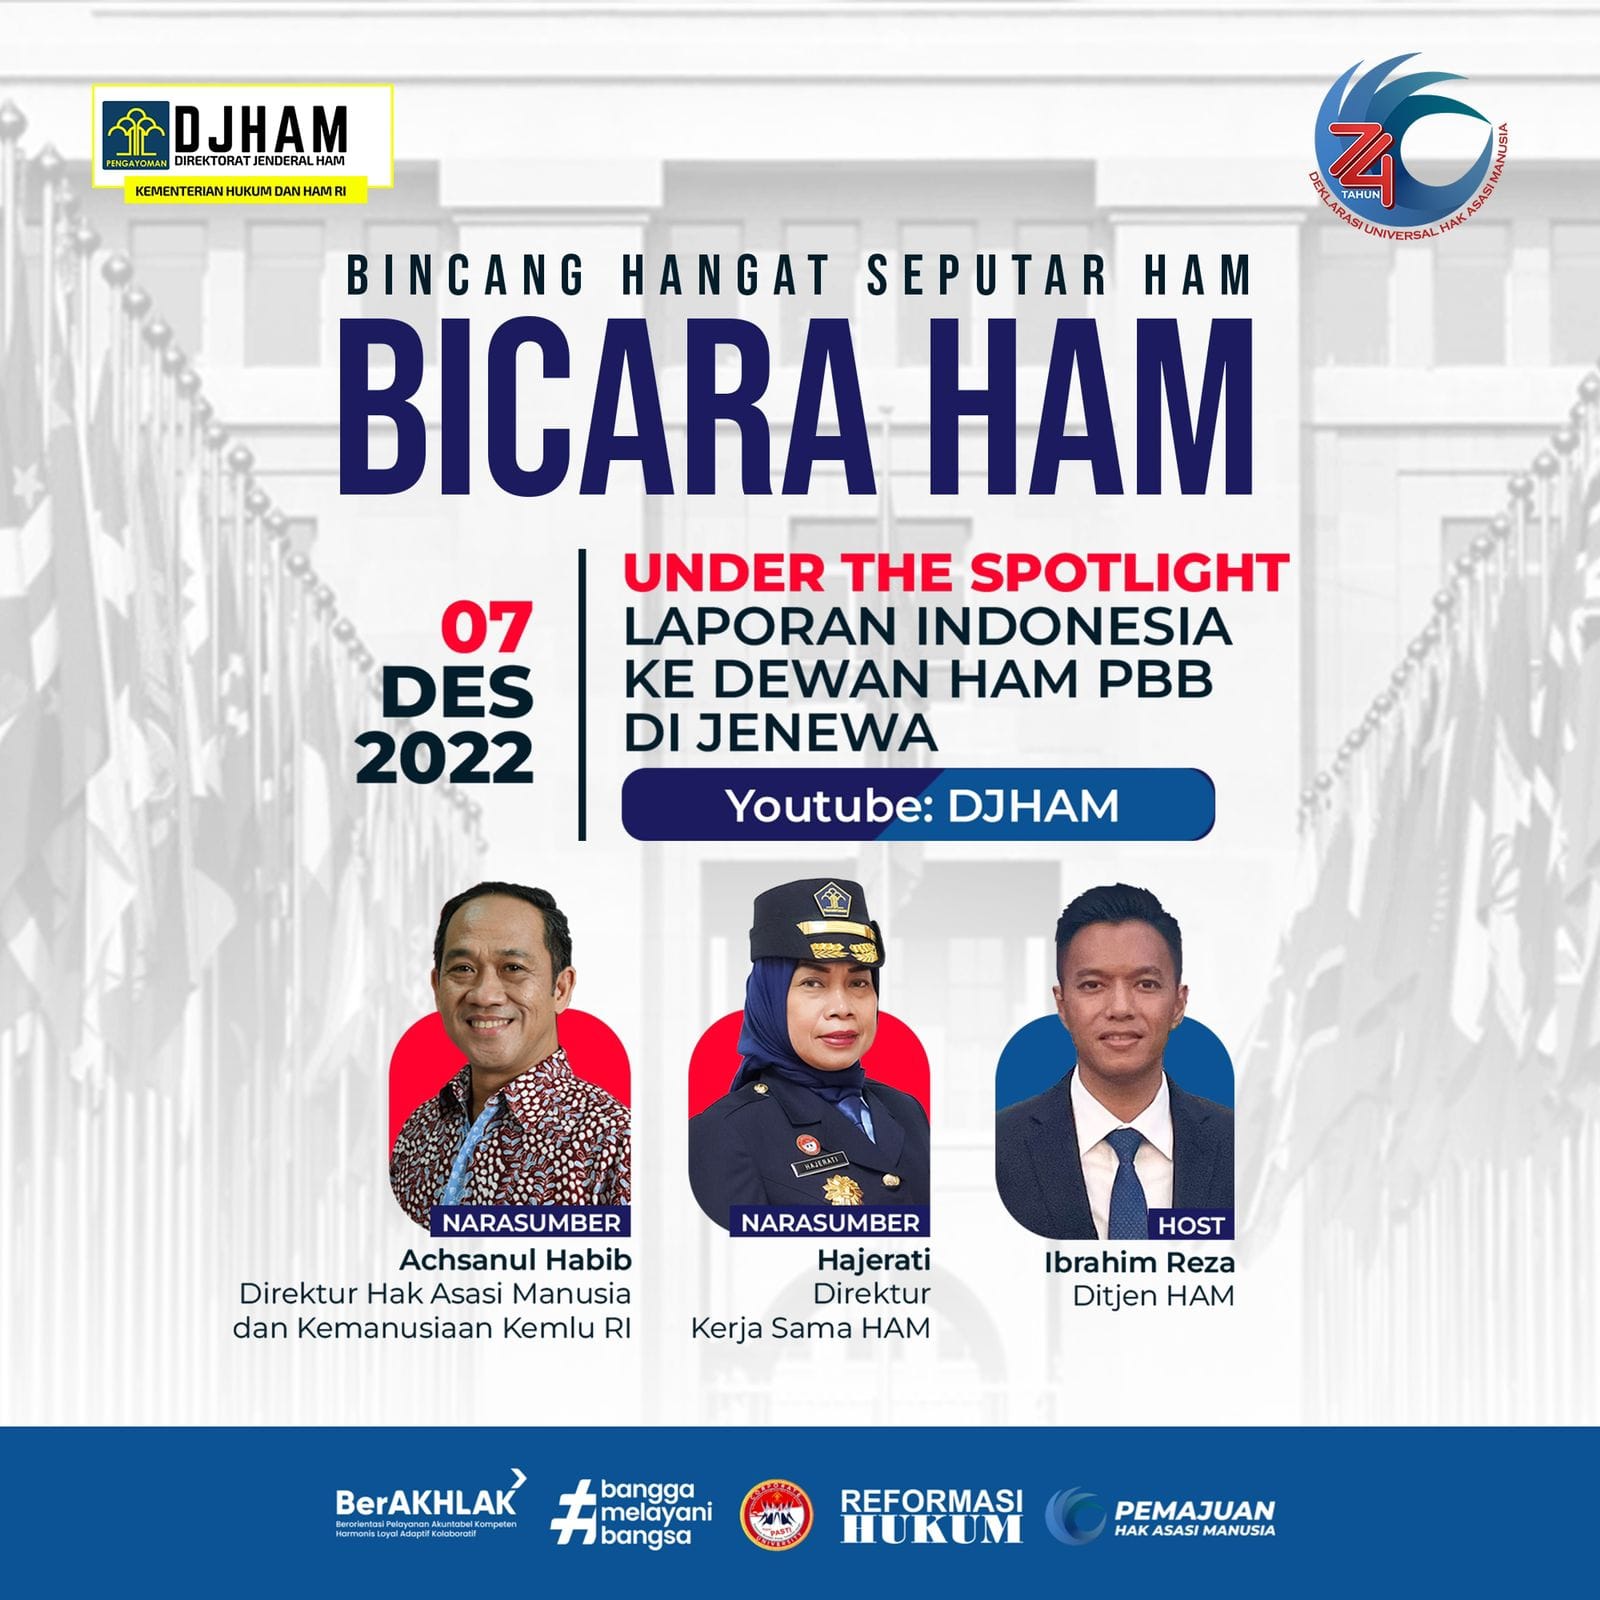 Bicara HAM: “Under The Spotlight Laporan Indonesia ke Dewan HAM PBB di Jenewa”